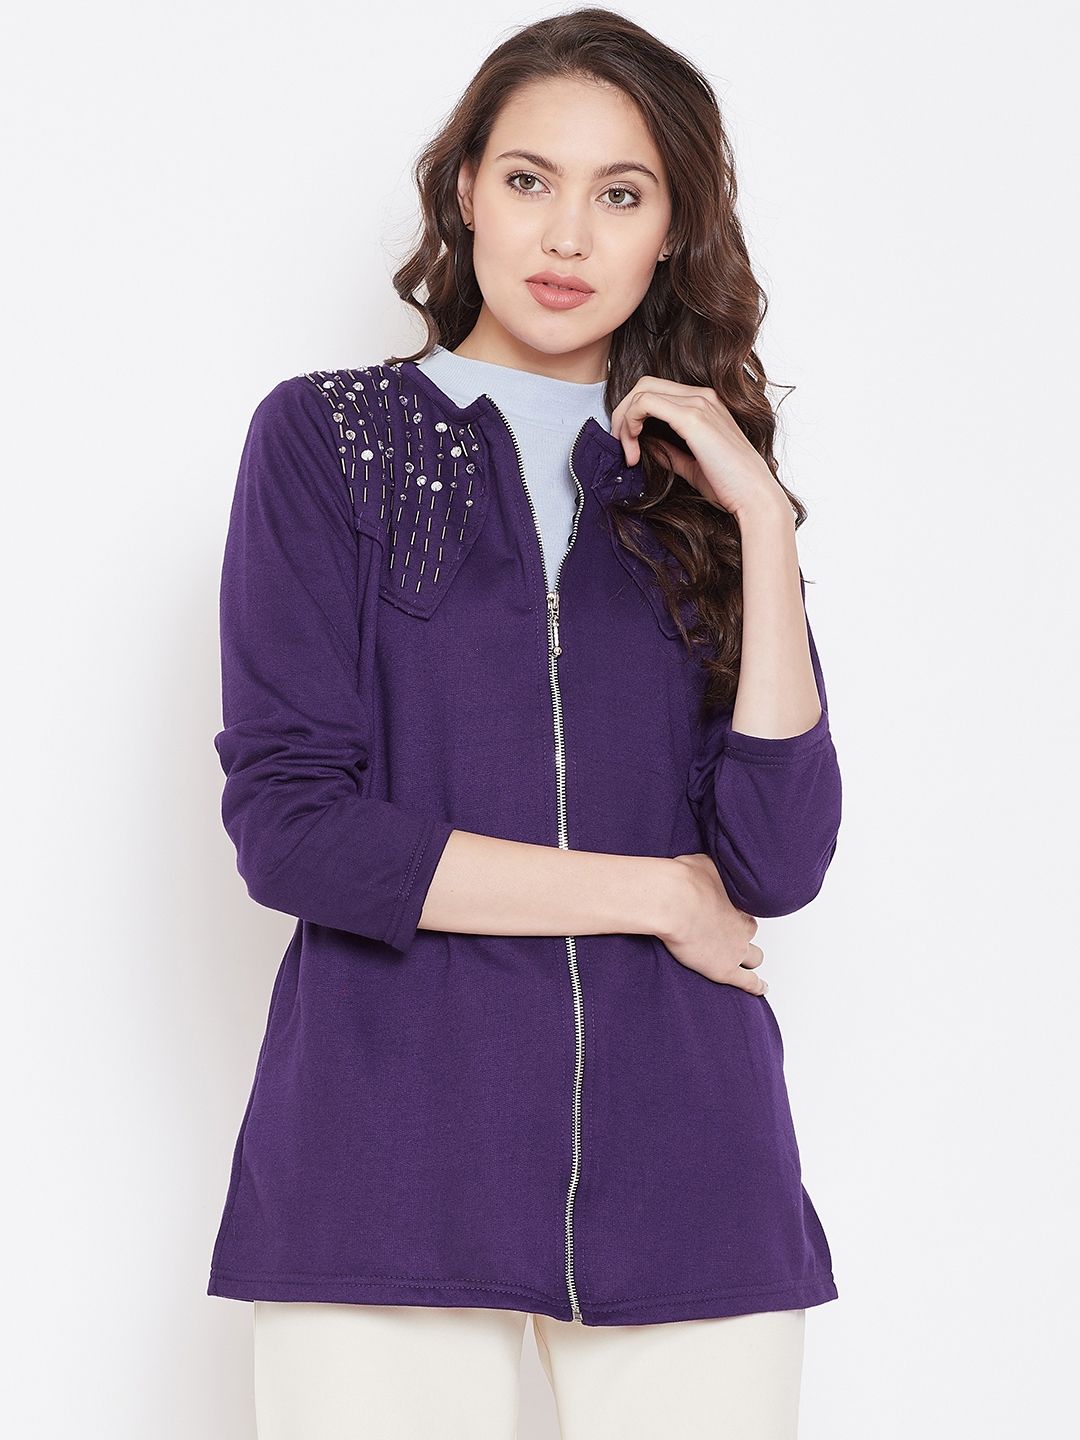 Belle Fille Women Purple Solid Jacket Price in India